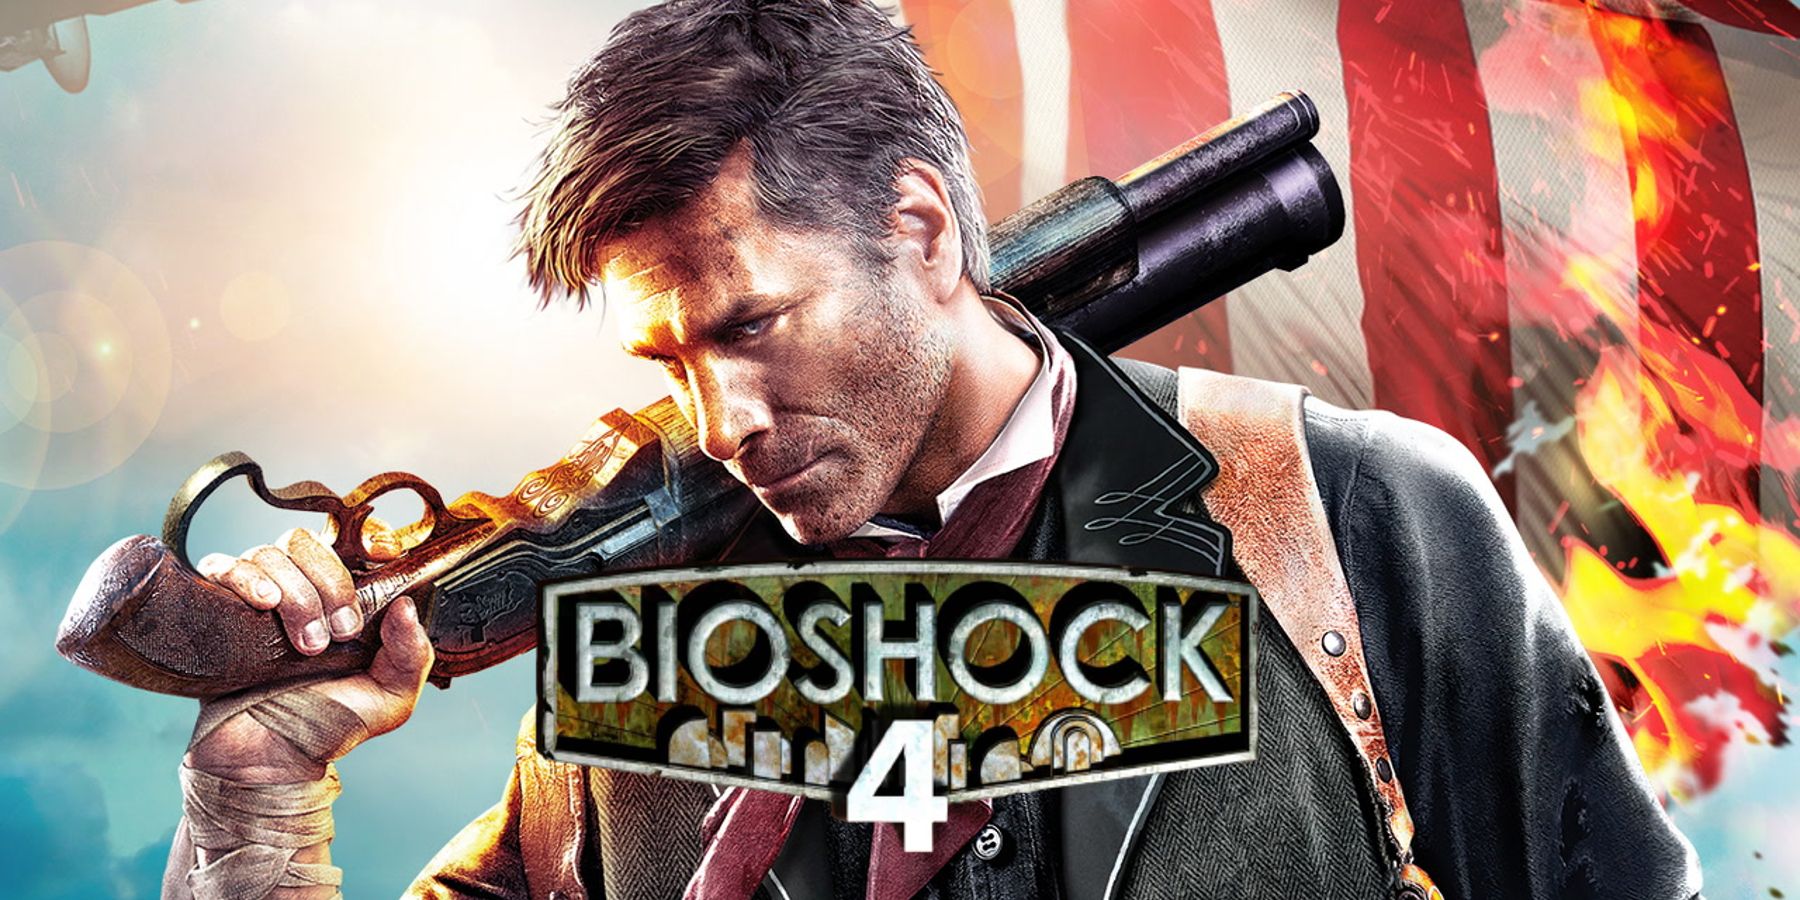 bioshock 4 protagonist